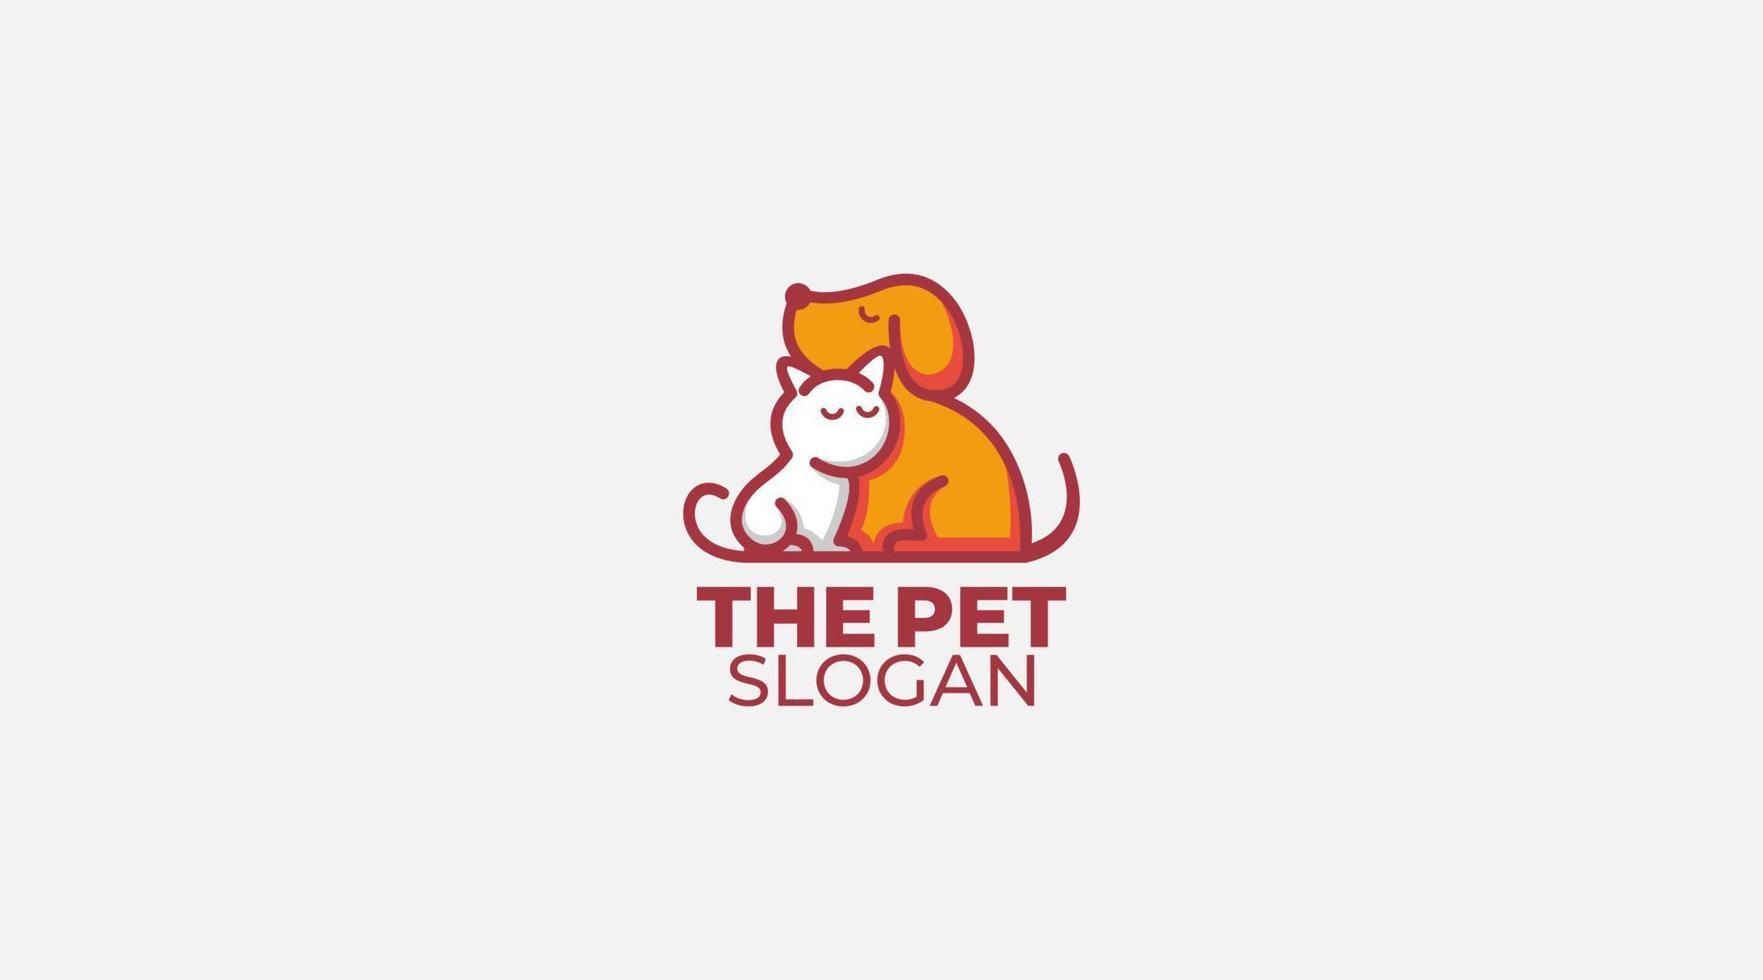 perro gato mascota redondo dibujos animados logo vector icono